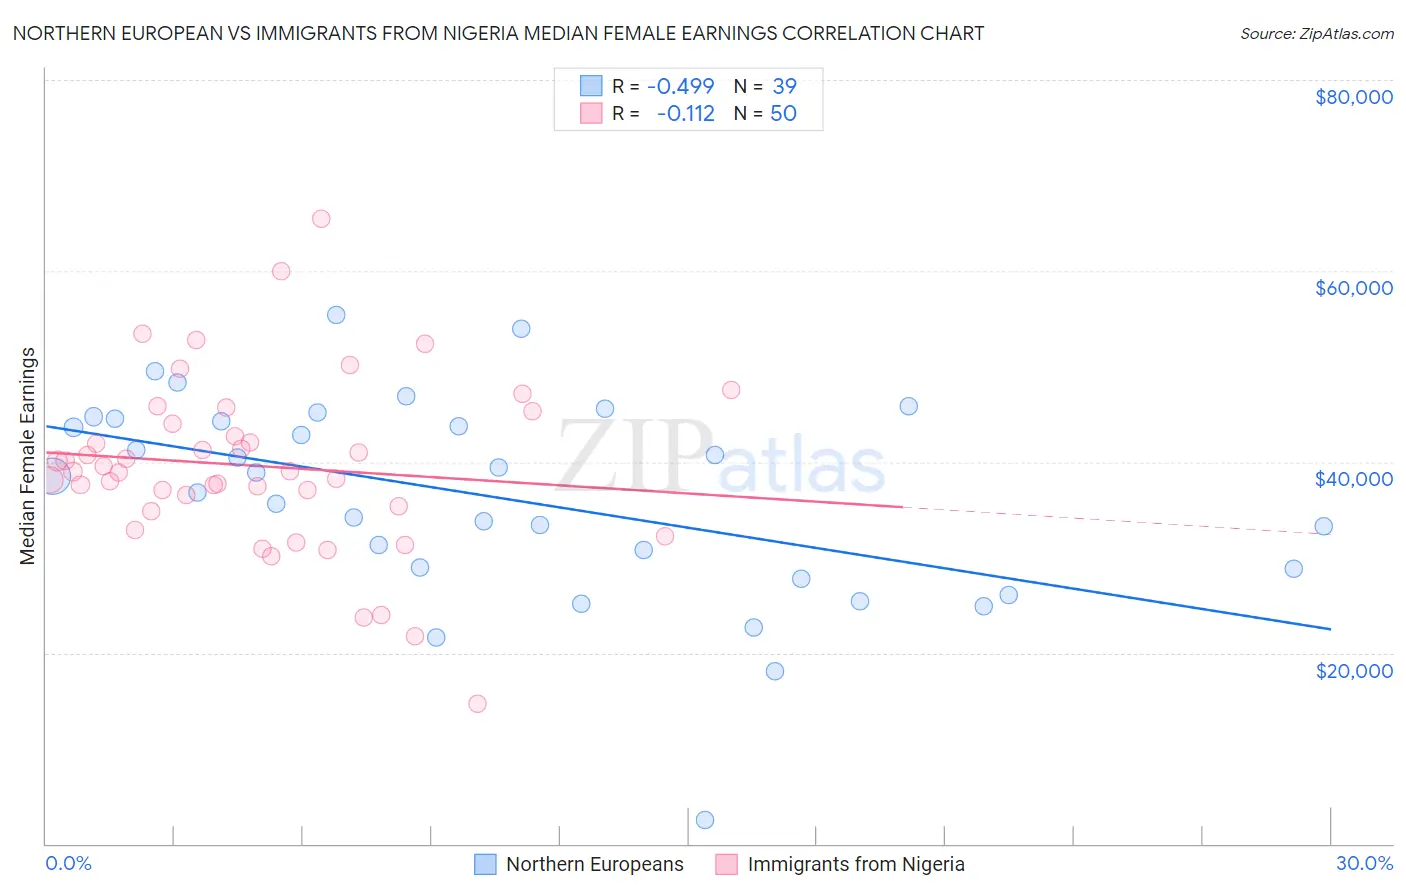 Northern European vs Immigrants from Nigeria Median Female Earnings